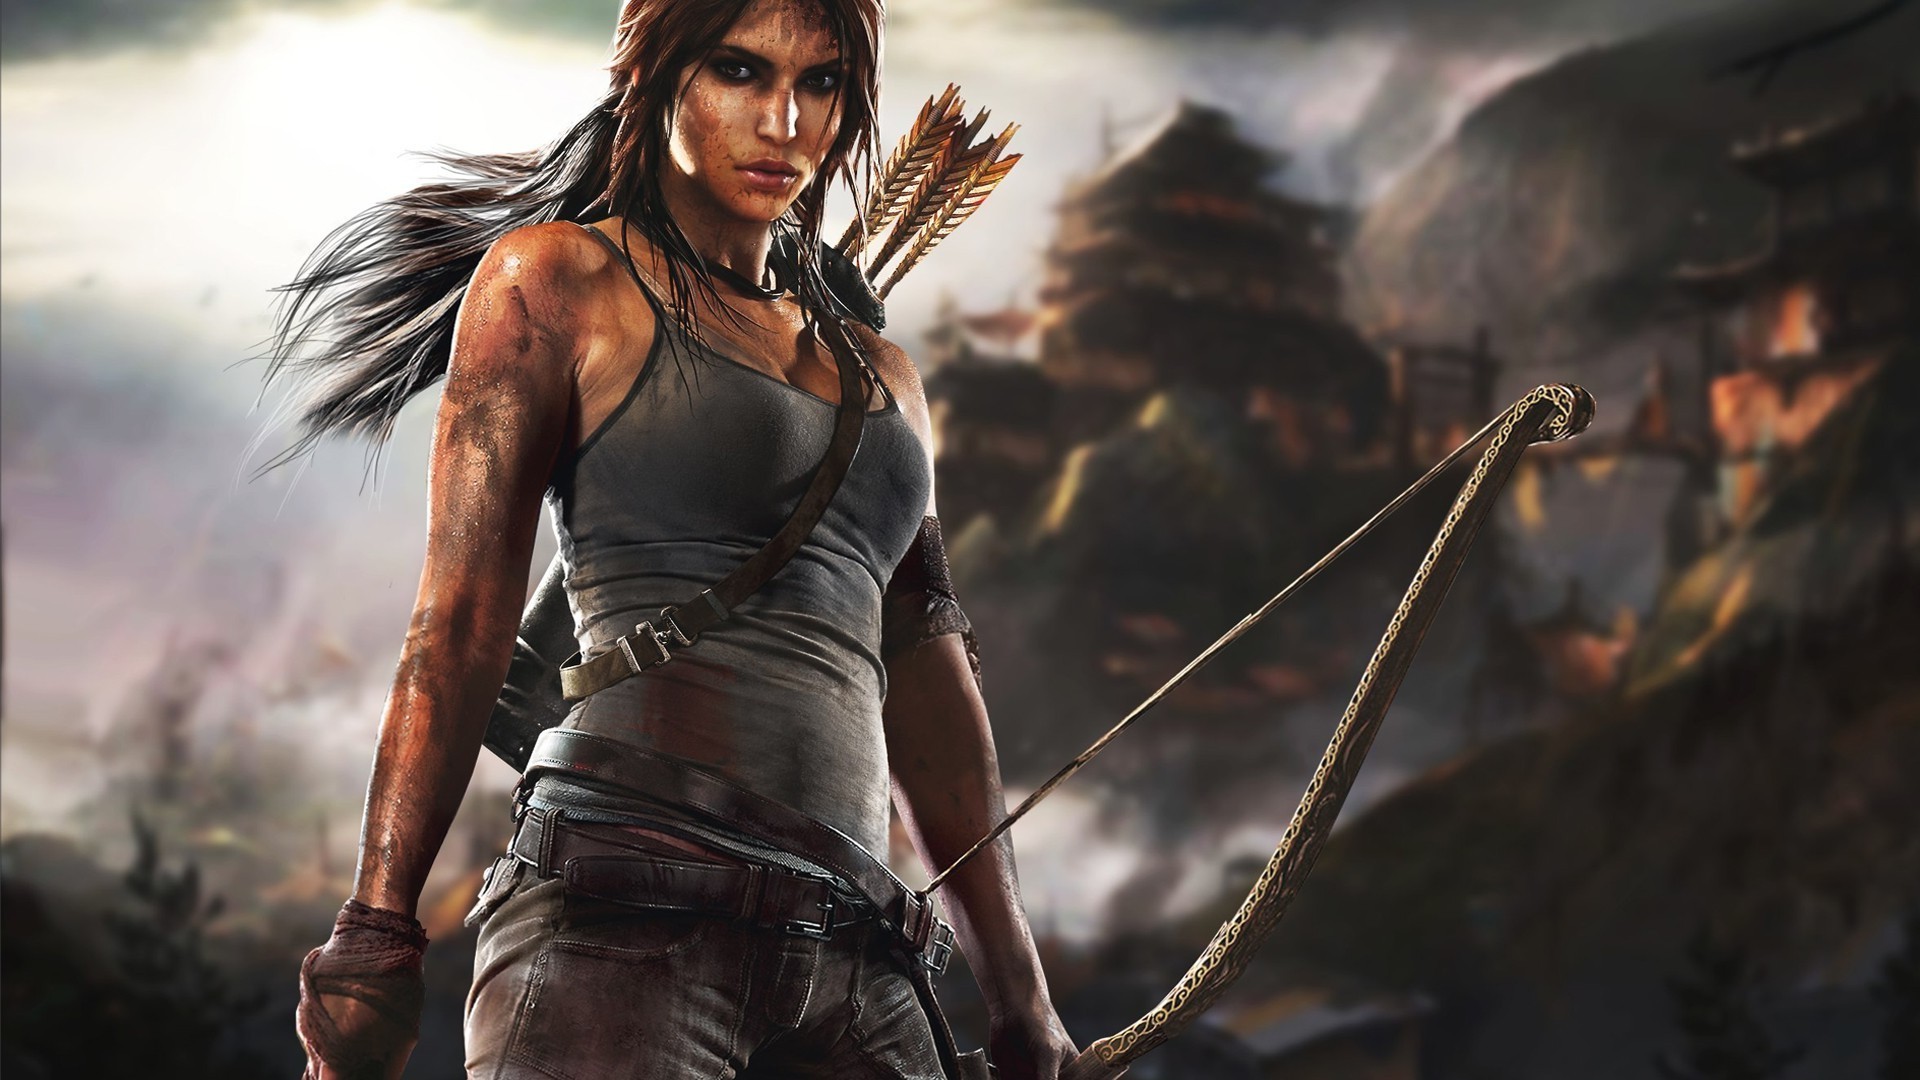 tomb raider, lara croft, weapons Wallpaper, HD Games 4K 